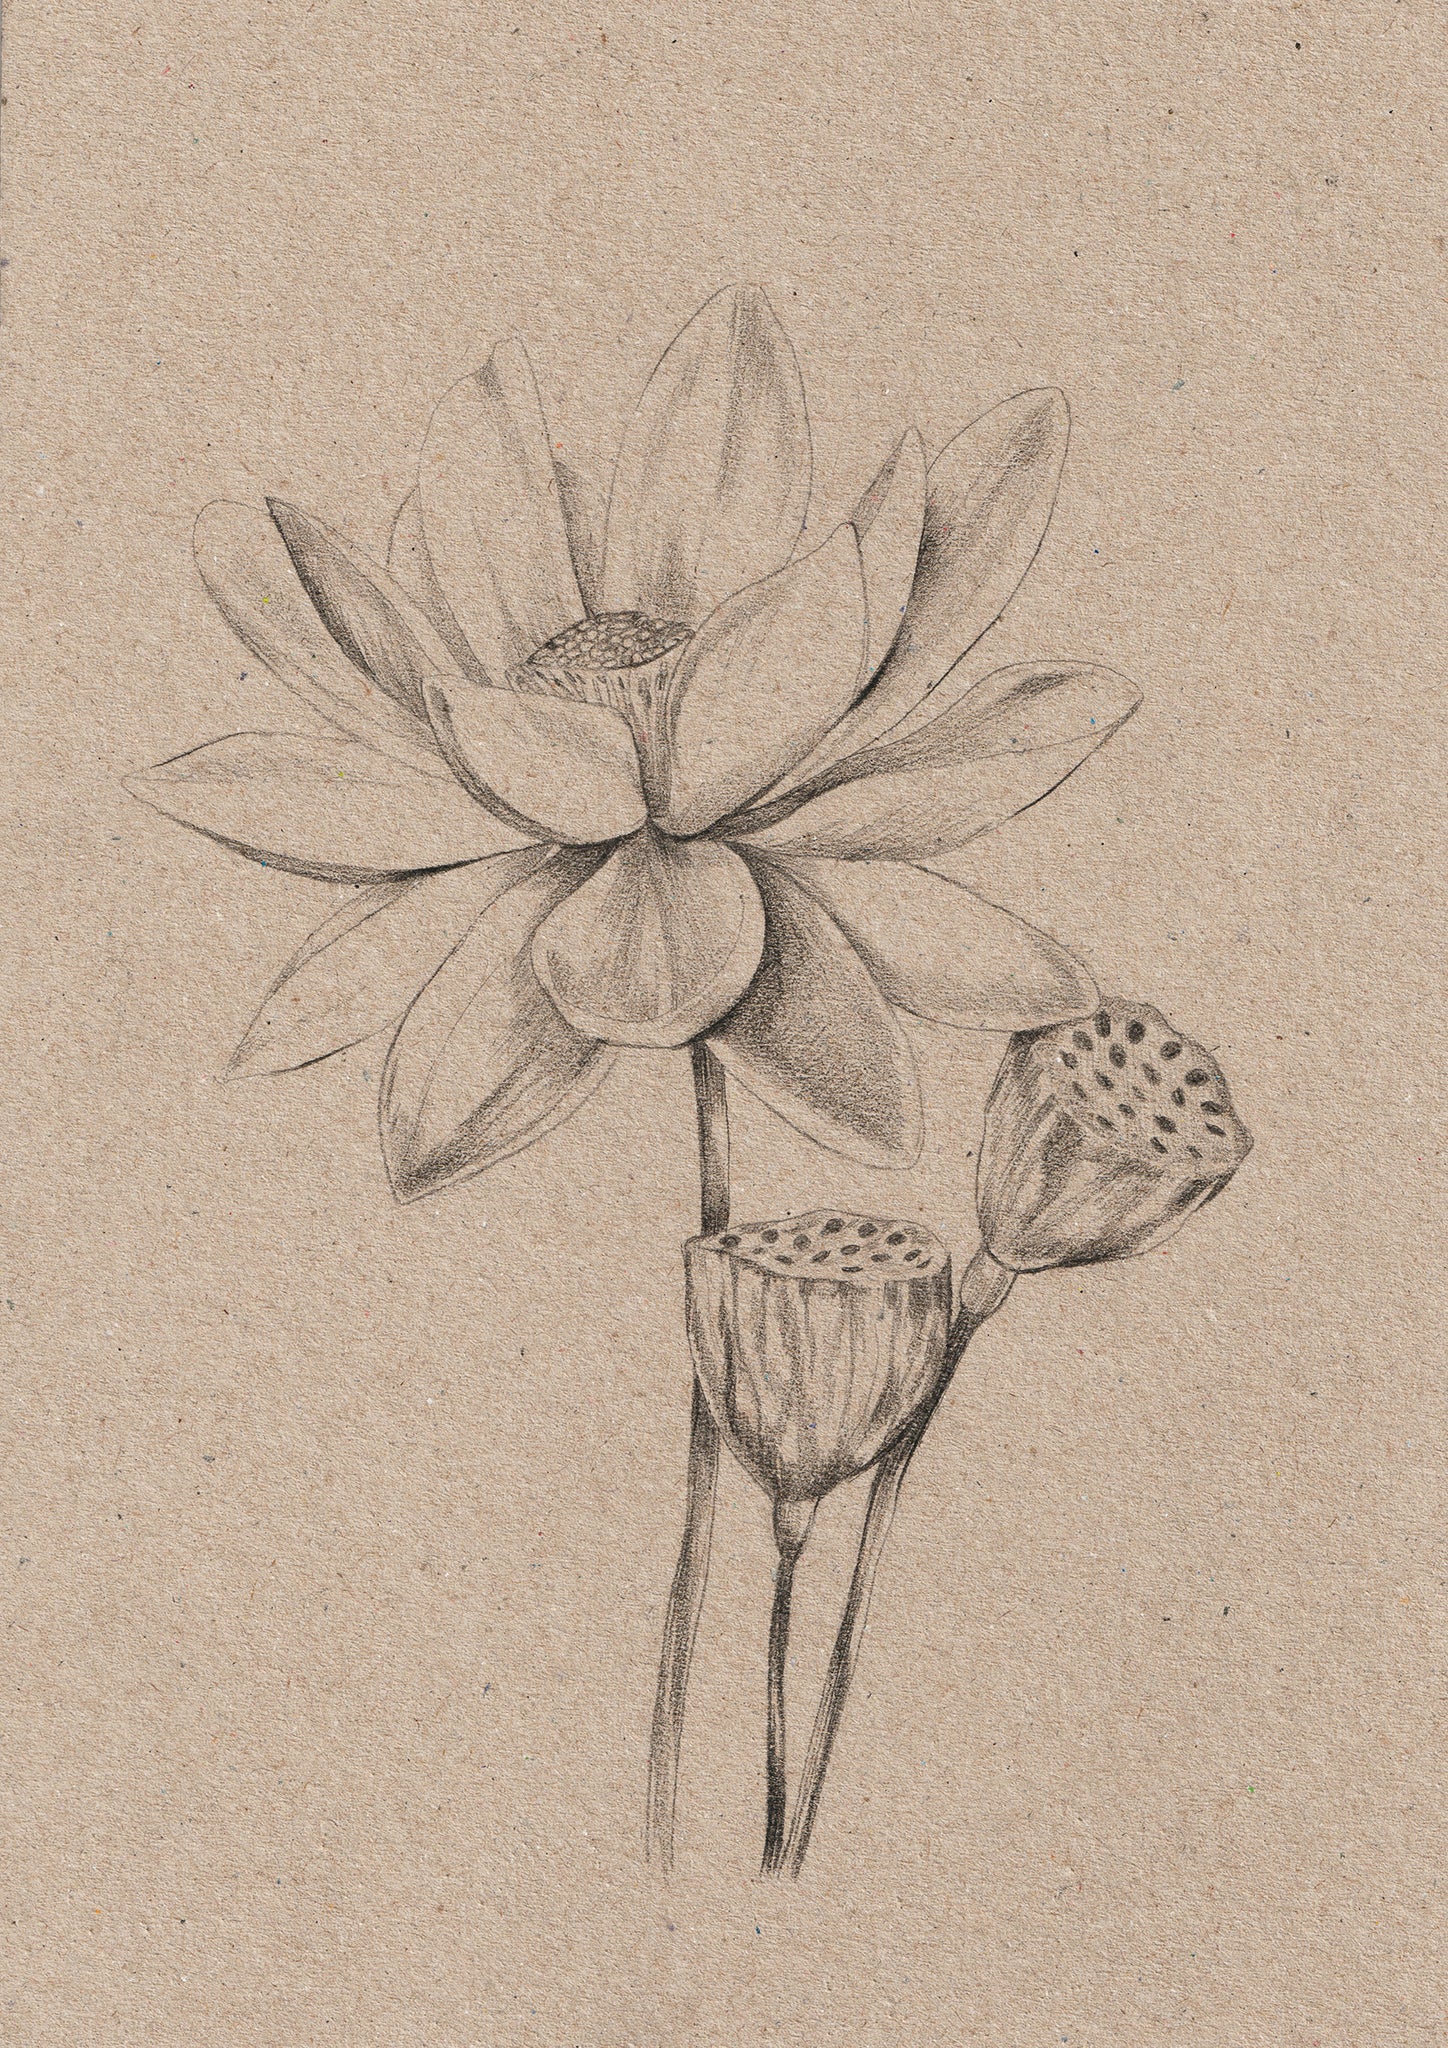 Kelly thompson botanical illustration illustrator for The Avanyguard Sunglasses